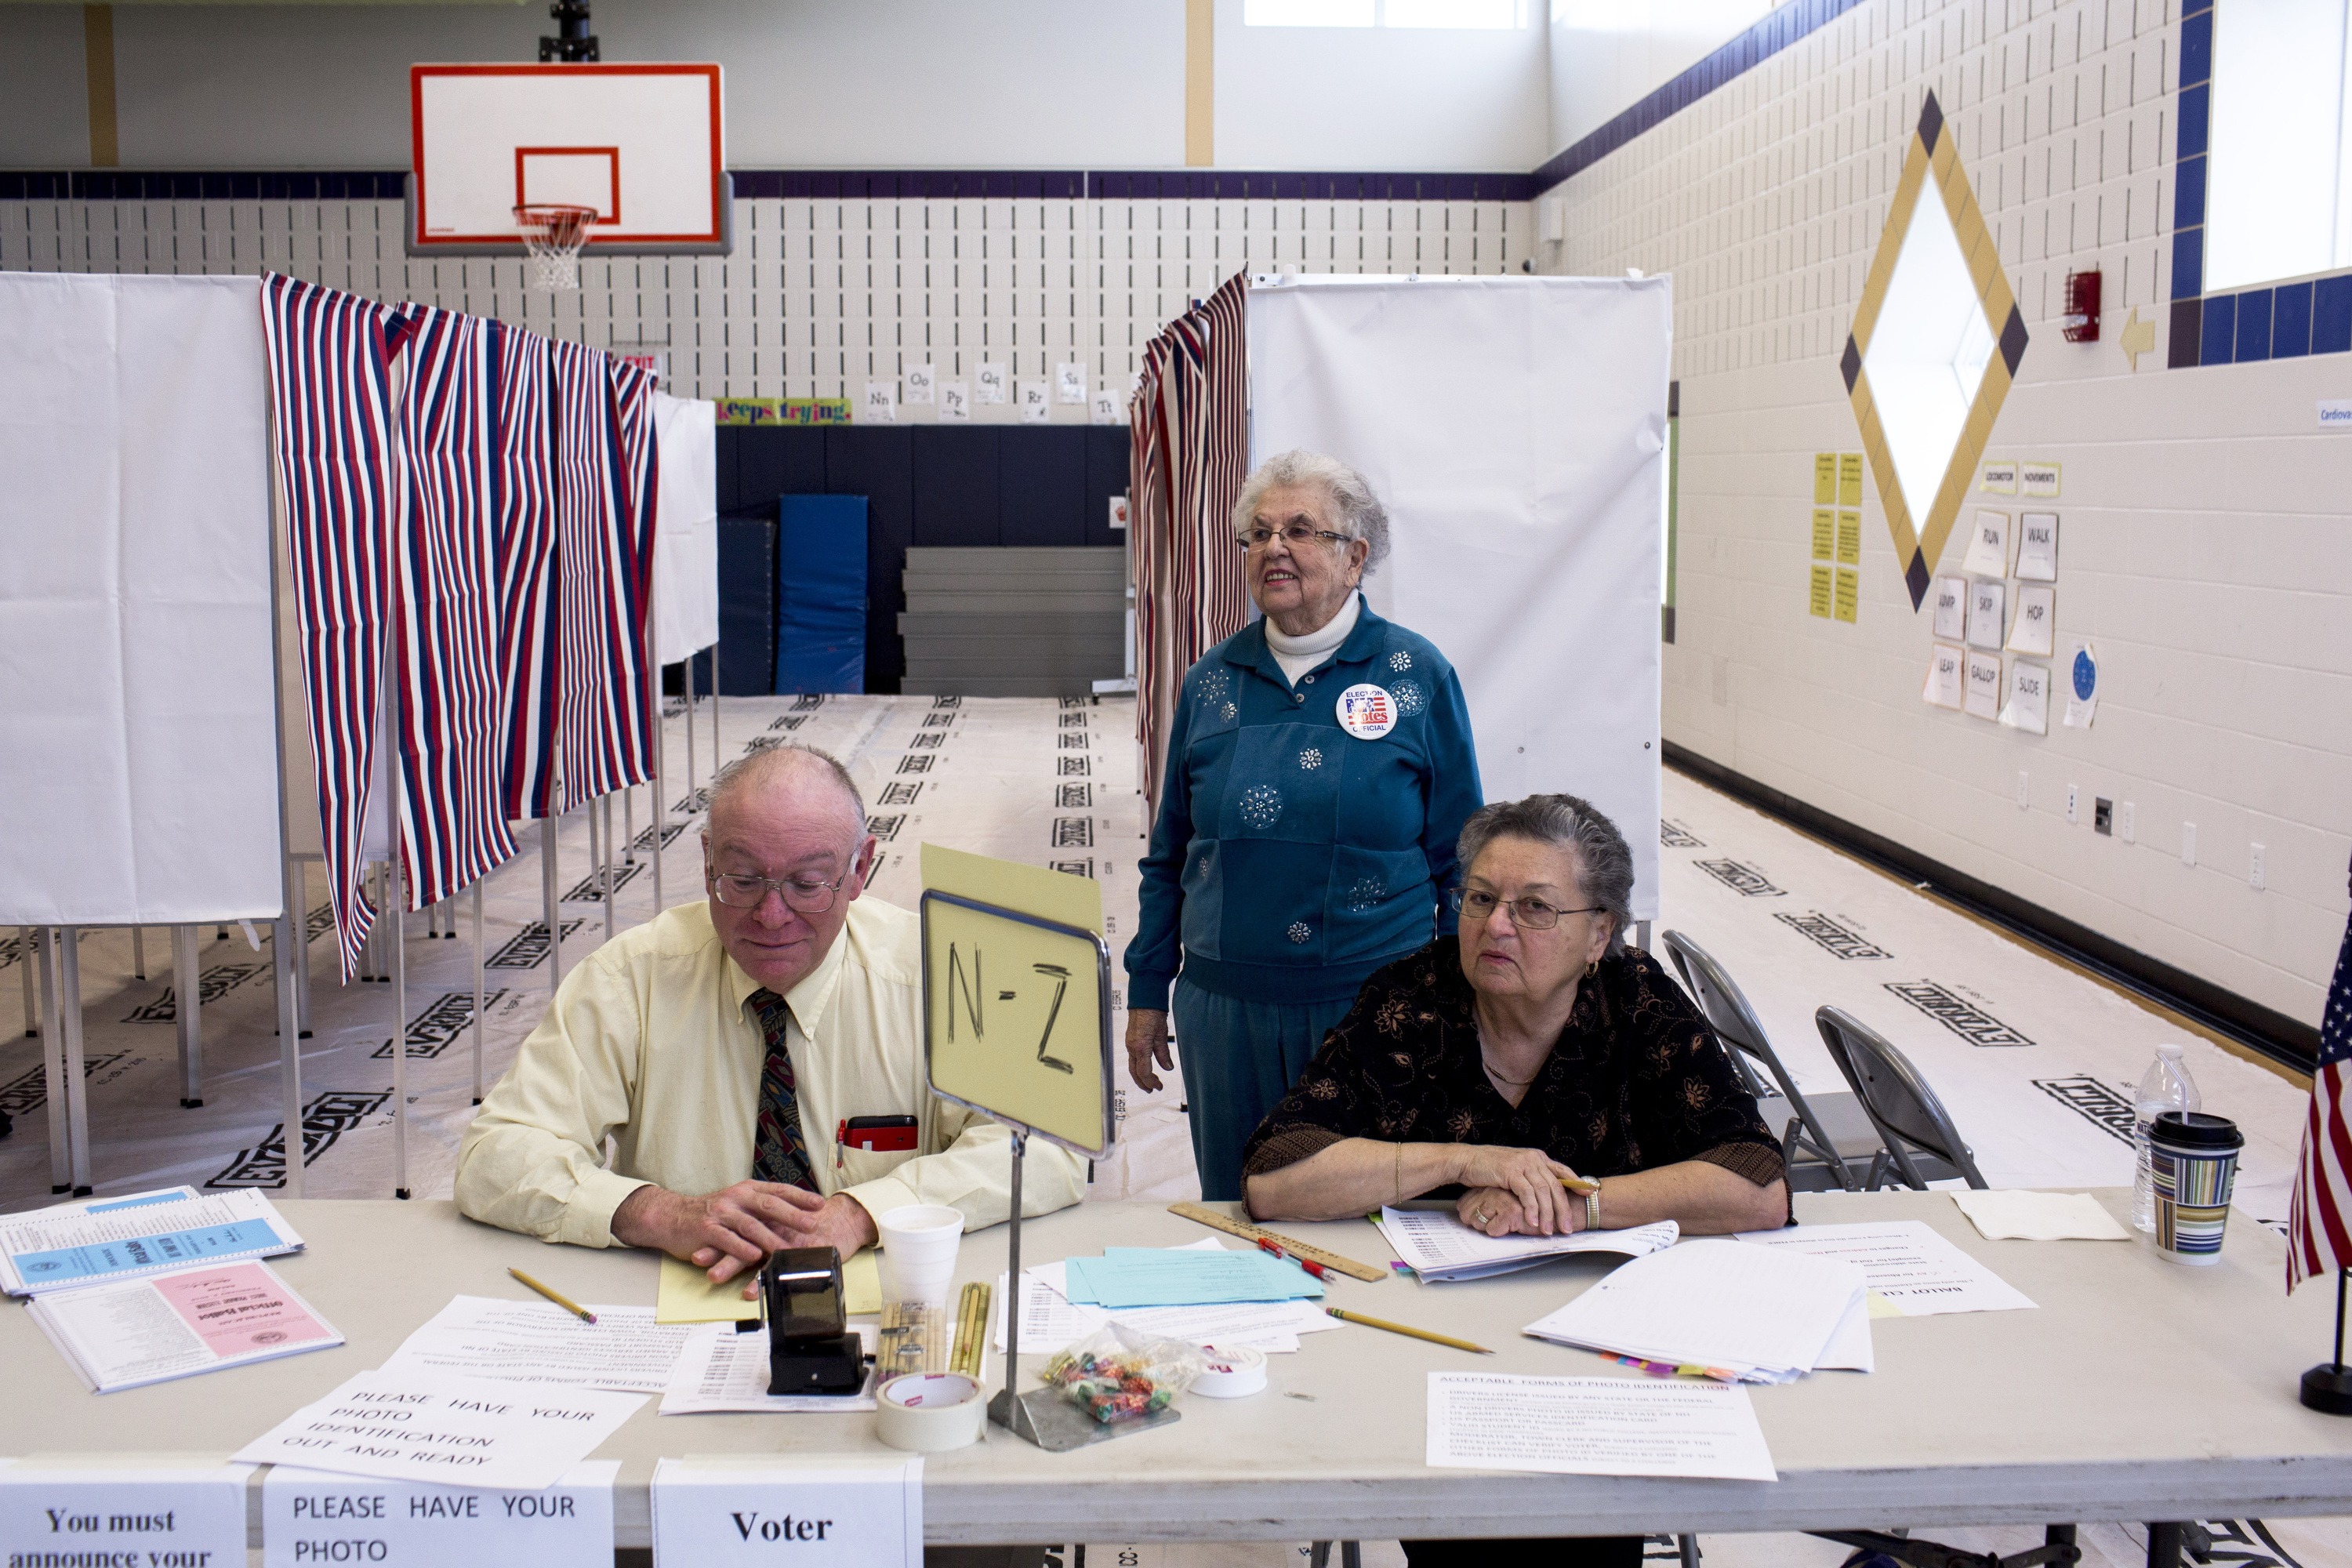 Volunteers staff a polling station at Windham High School on Feb. 9, 2016, in Windham, N.H. (Natalie Keyssar for TIME)